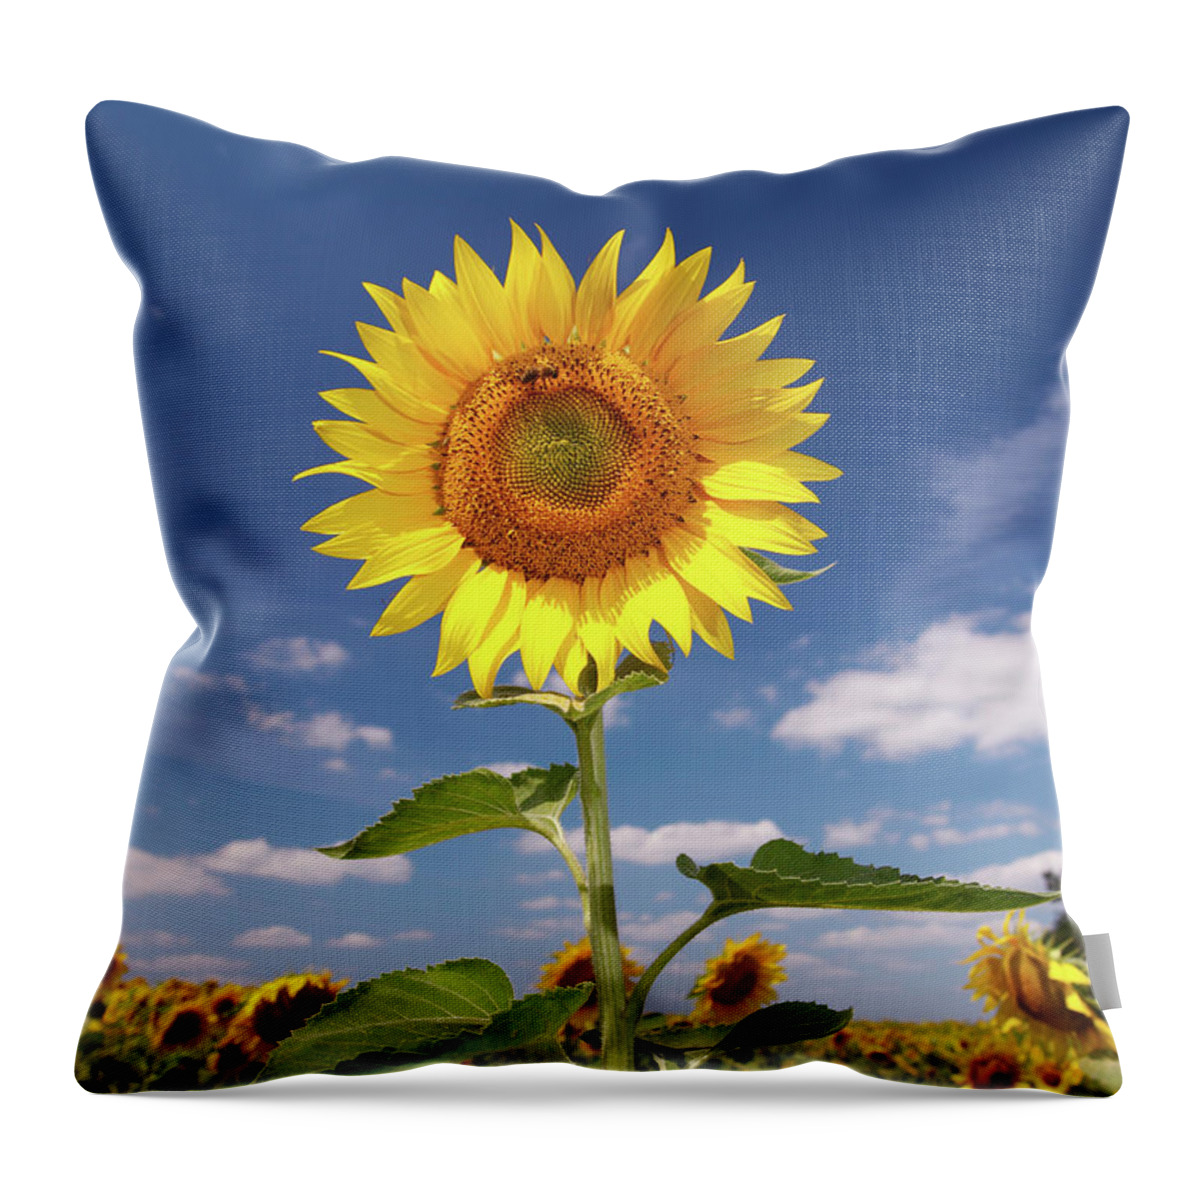 Petal Throw Pillow featuring the photograph Field Of Sunflowers by Sandsun